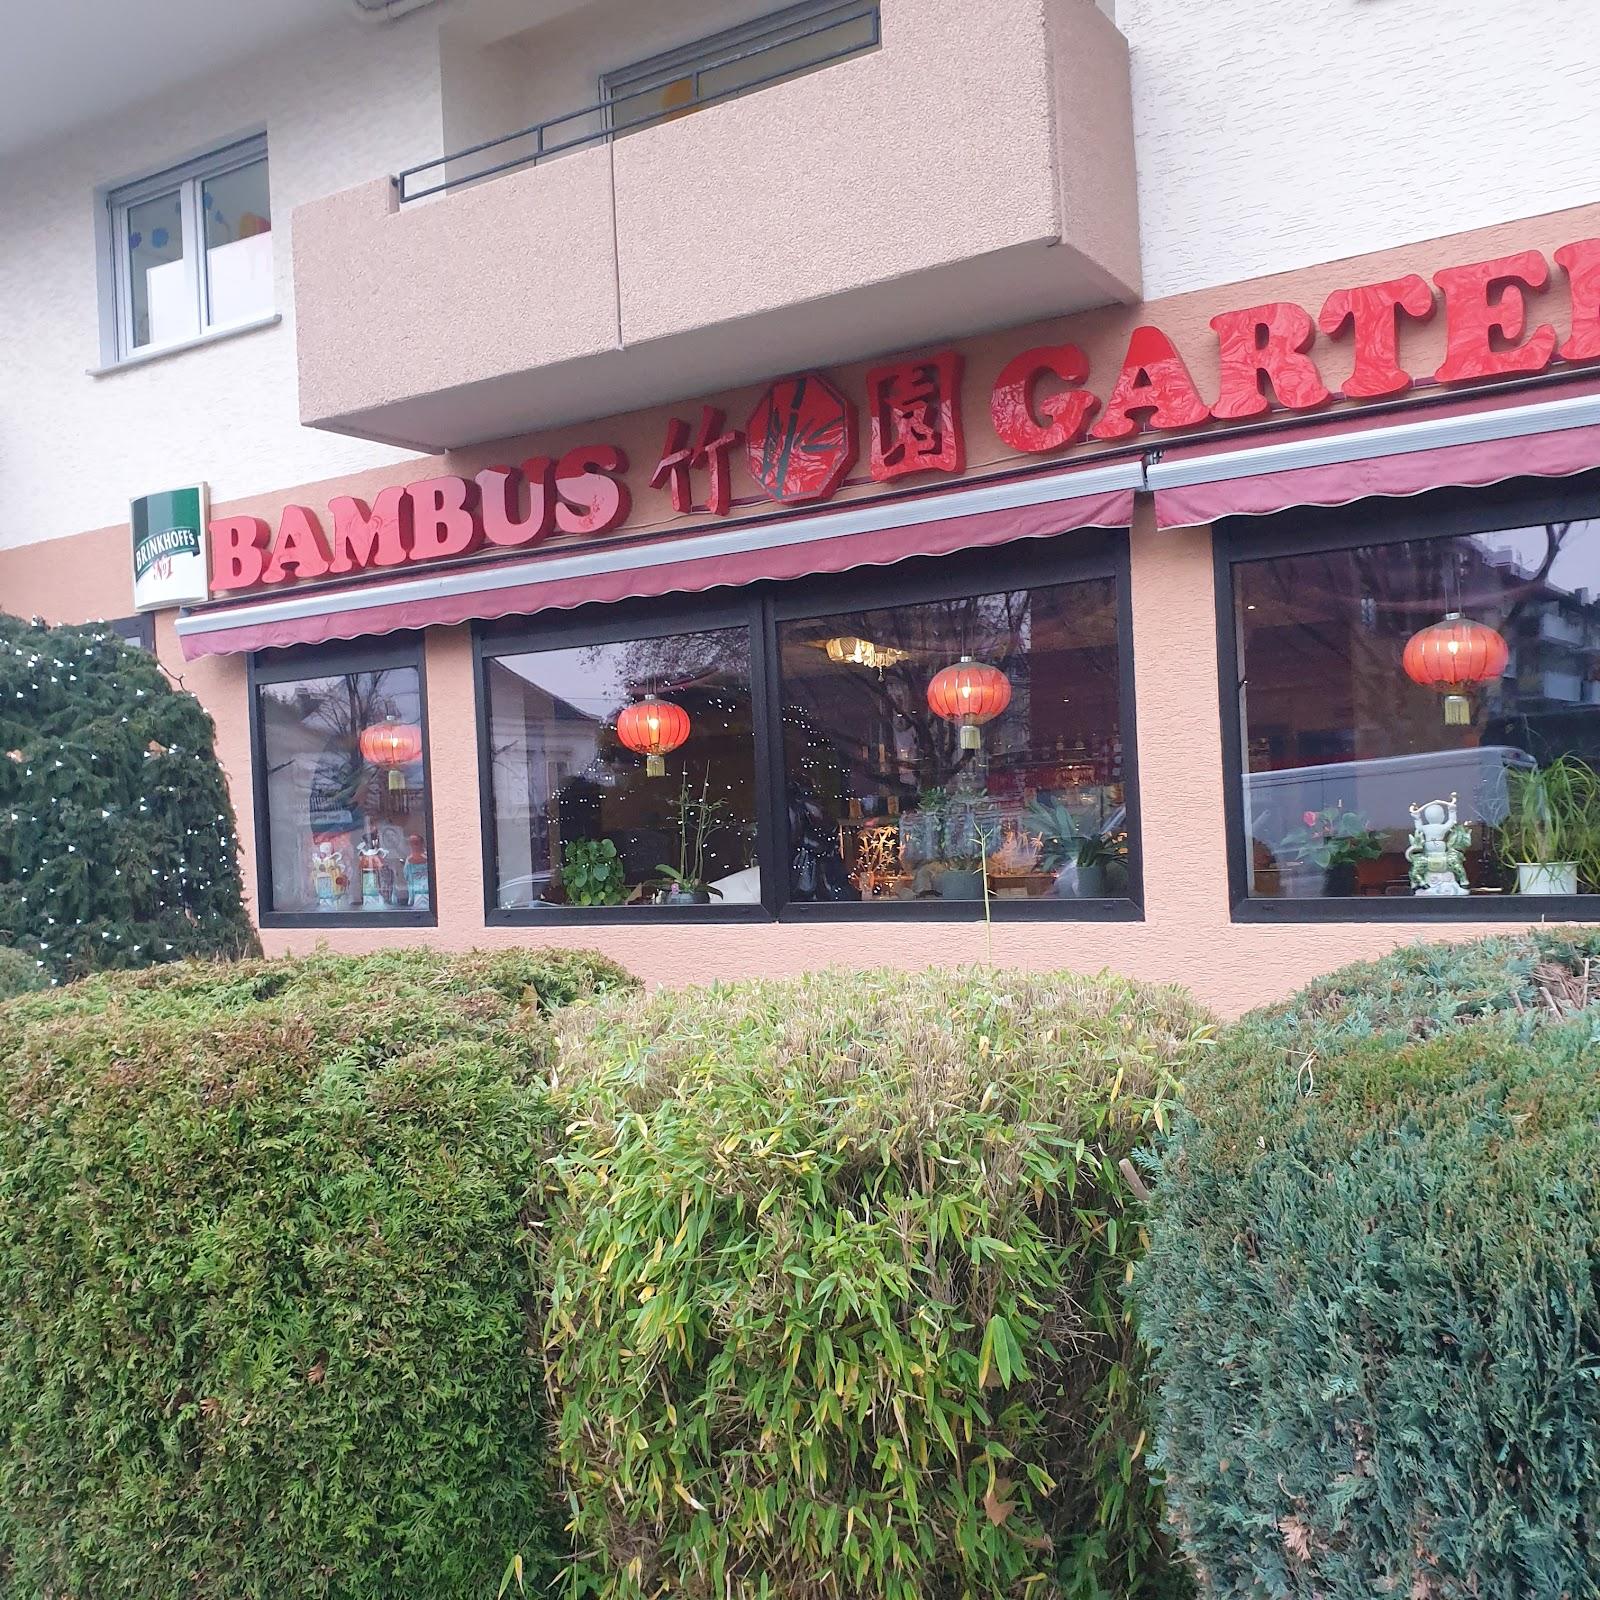 Restaurant "Bambusgarten" in Dortmund